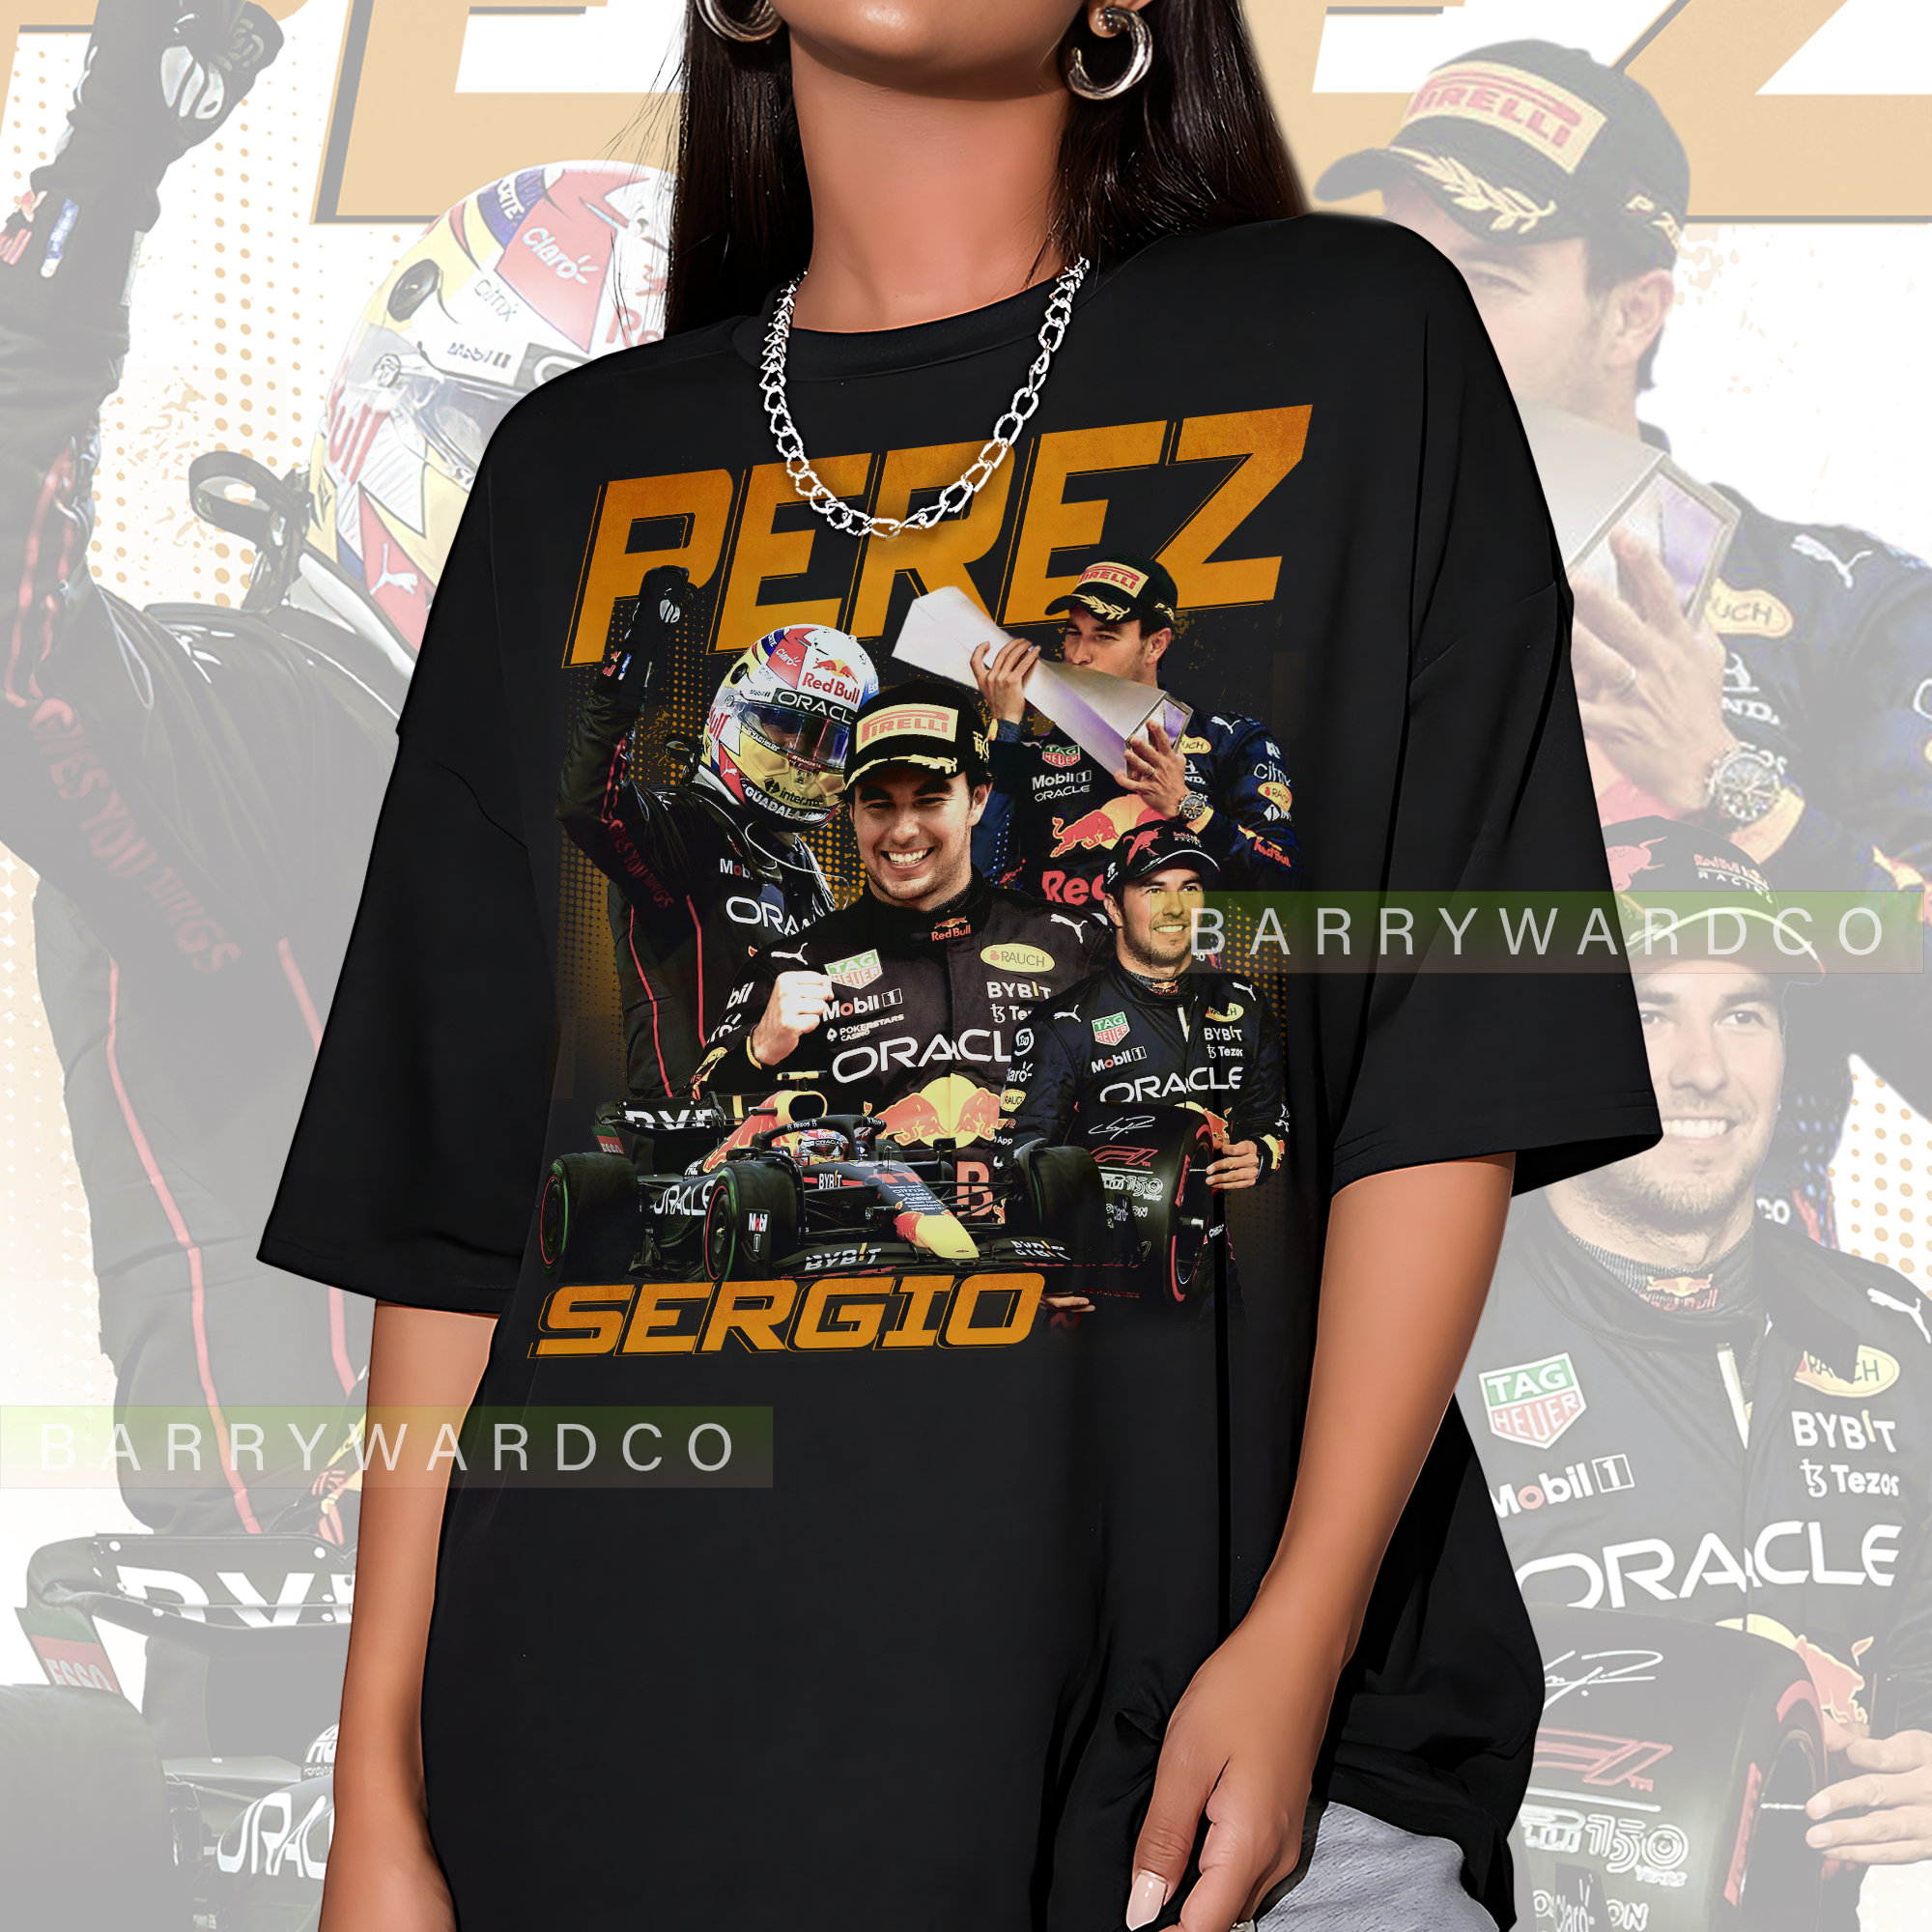 Sergio Checo Pérez F1 Car 11  Kids T-Shirt for Sale by NewestZonea